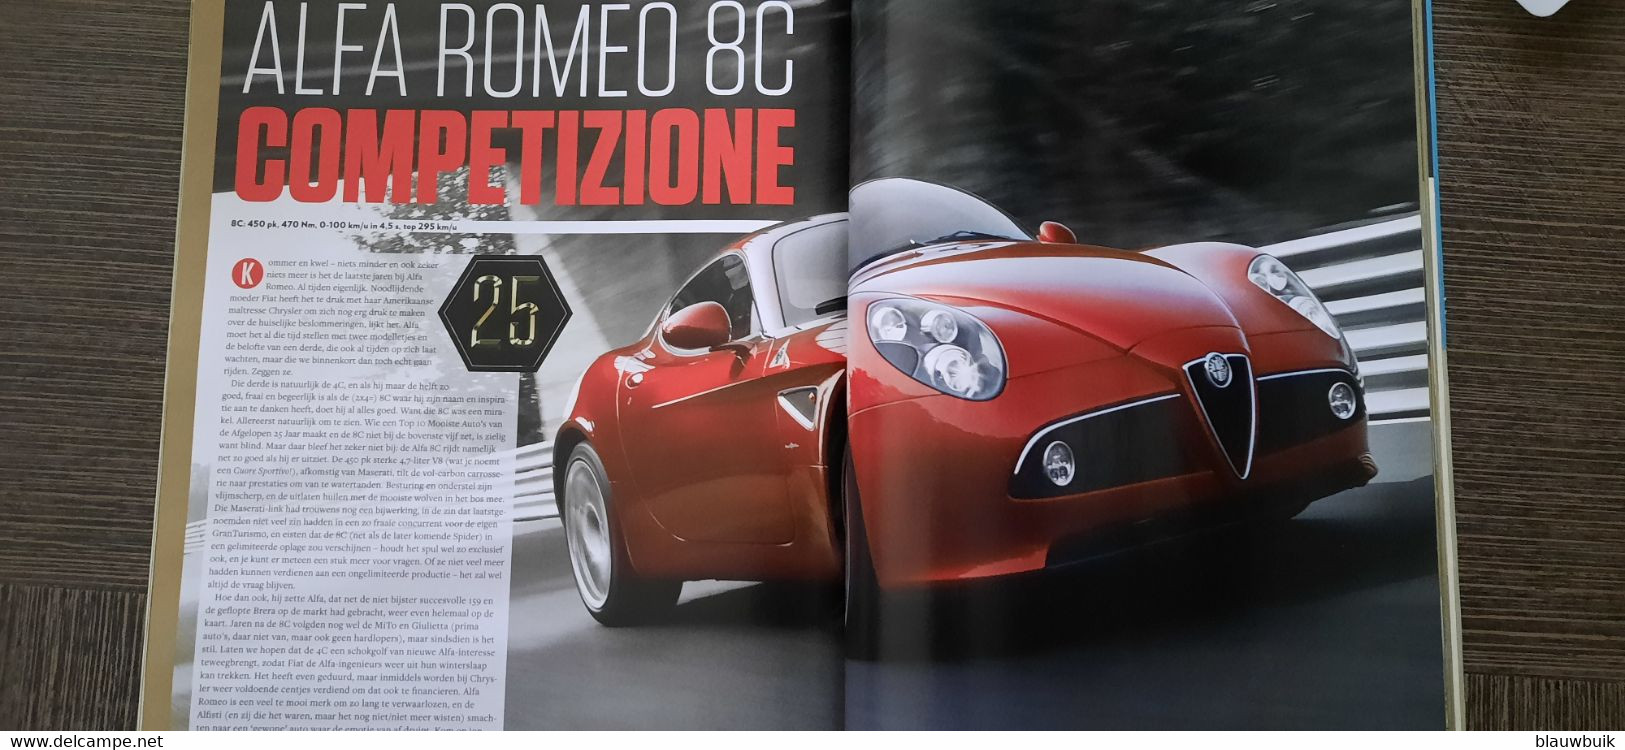 Top Gear Magazine N°100 Editie -  2013 - Auto/moto